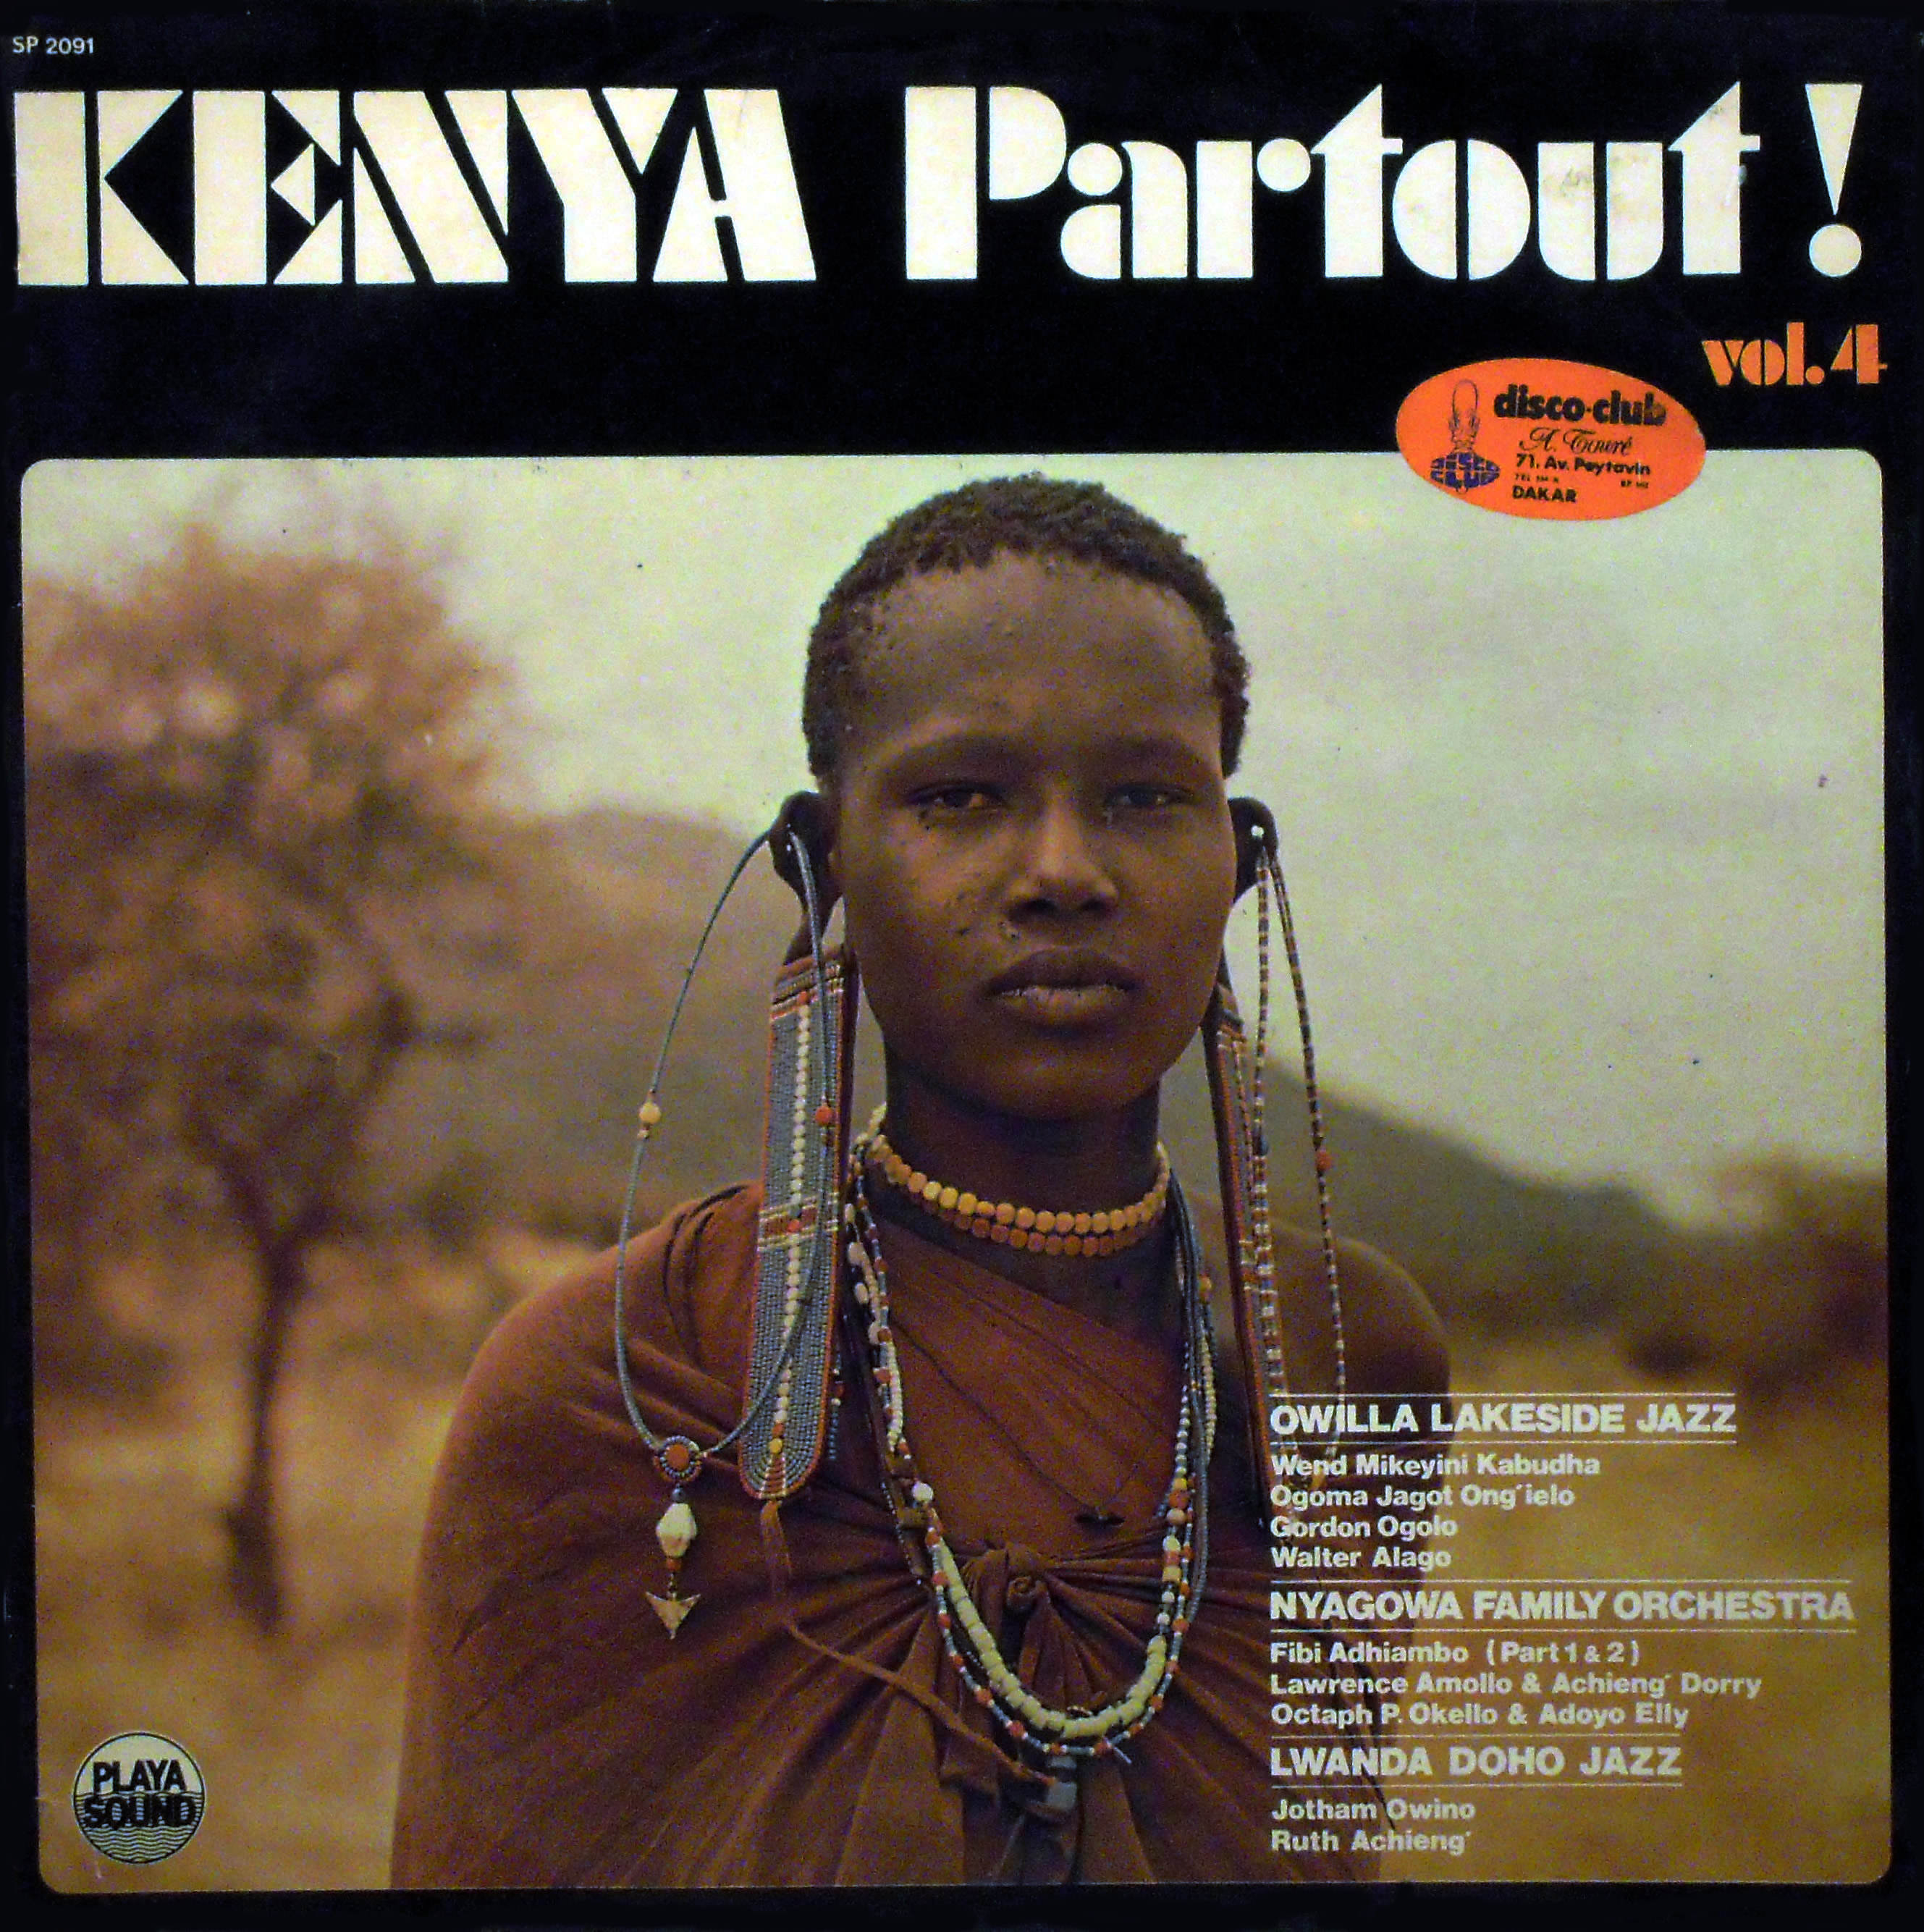 Kenya Partout ! vol.4 – Various Artists,Playa Sound / Soul Posters 1976 Kenya-Partout-vol.4-front